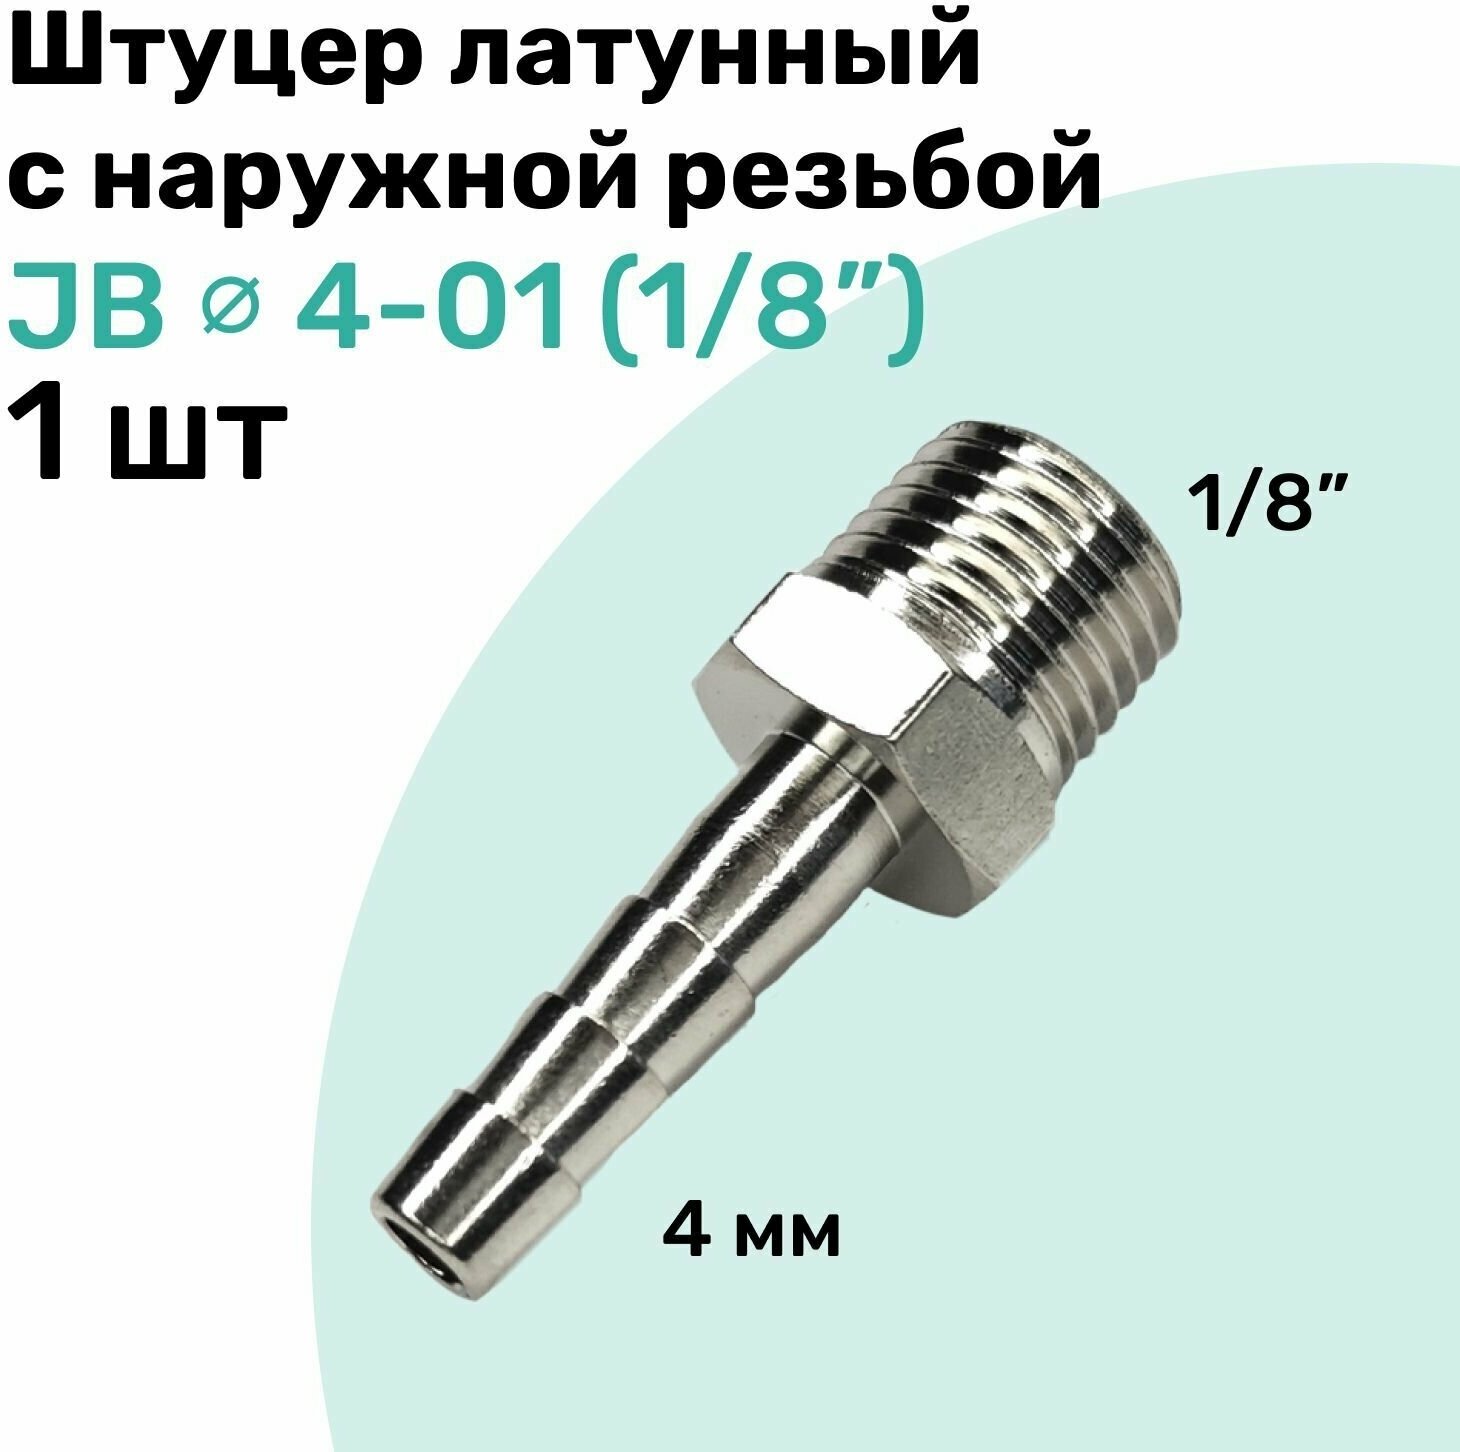 Штуцер латунный елочка с наружной резьбой JB 4-01 4мм - R1/8" Пневмоштуцер NBPT